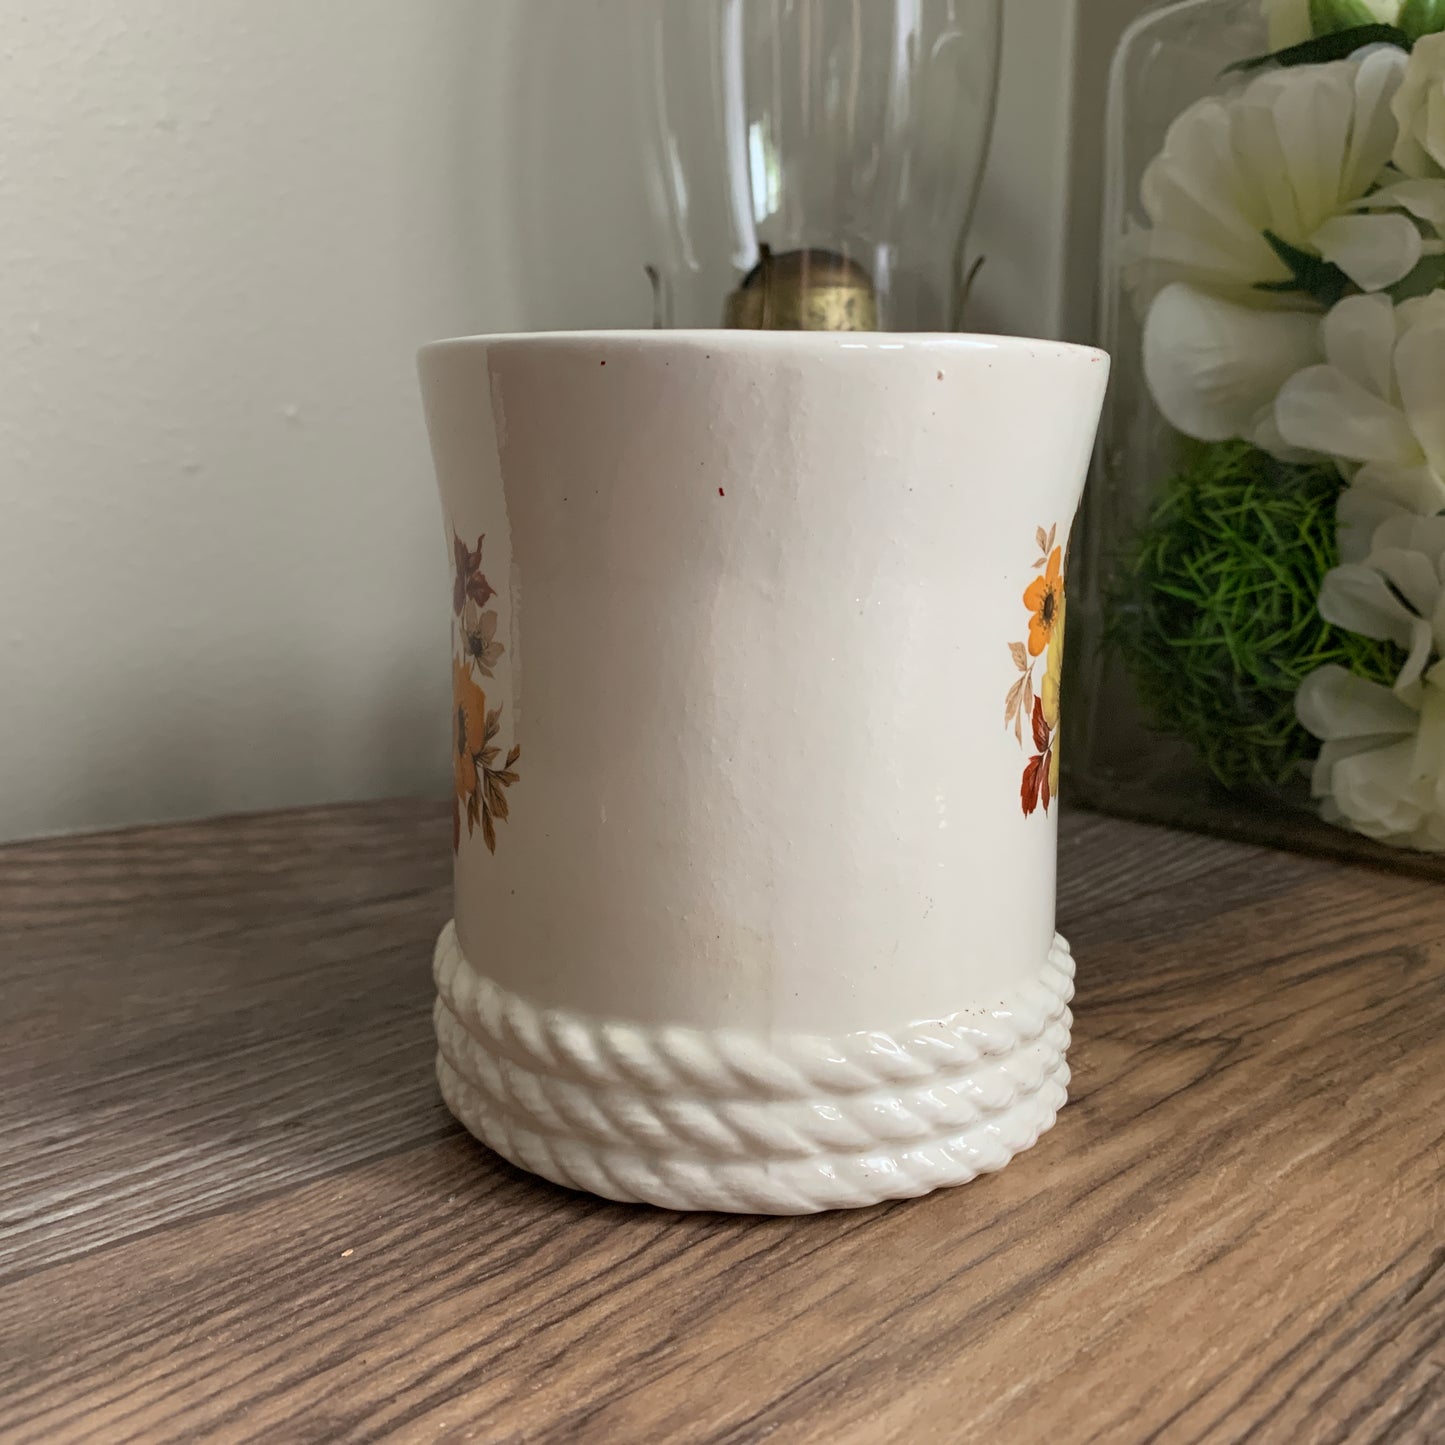 Vintage Ceramic Mug with Earth Tone Floral Pattern